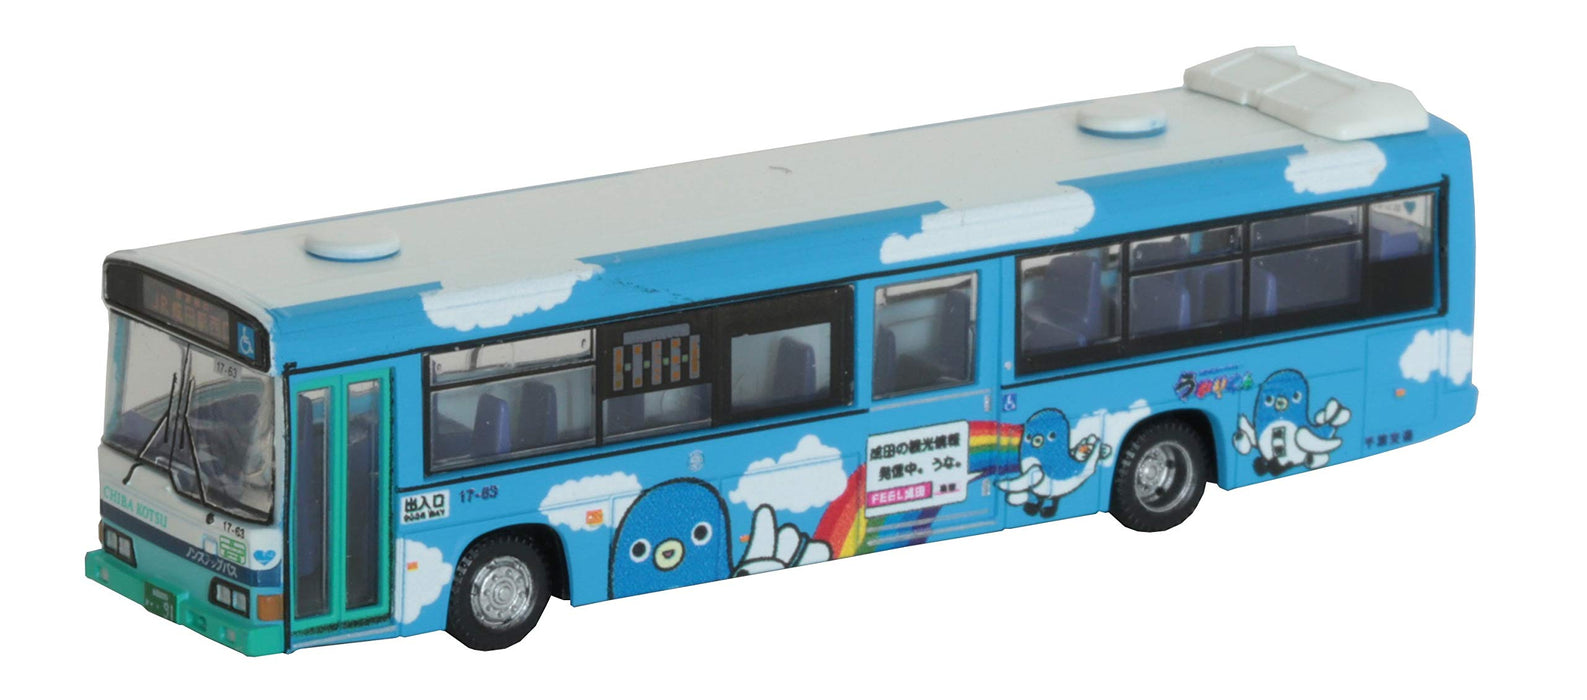 Tomytec Bus Collection - Chiba Kotsu Unarikun Wrapping Bus Diorama Première édition limitée